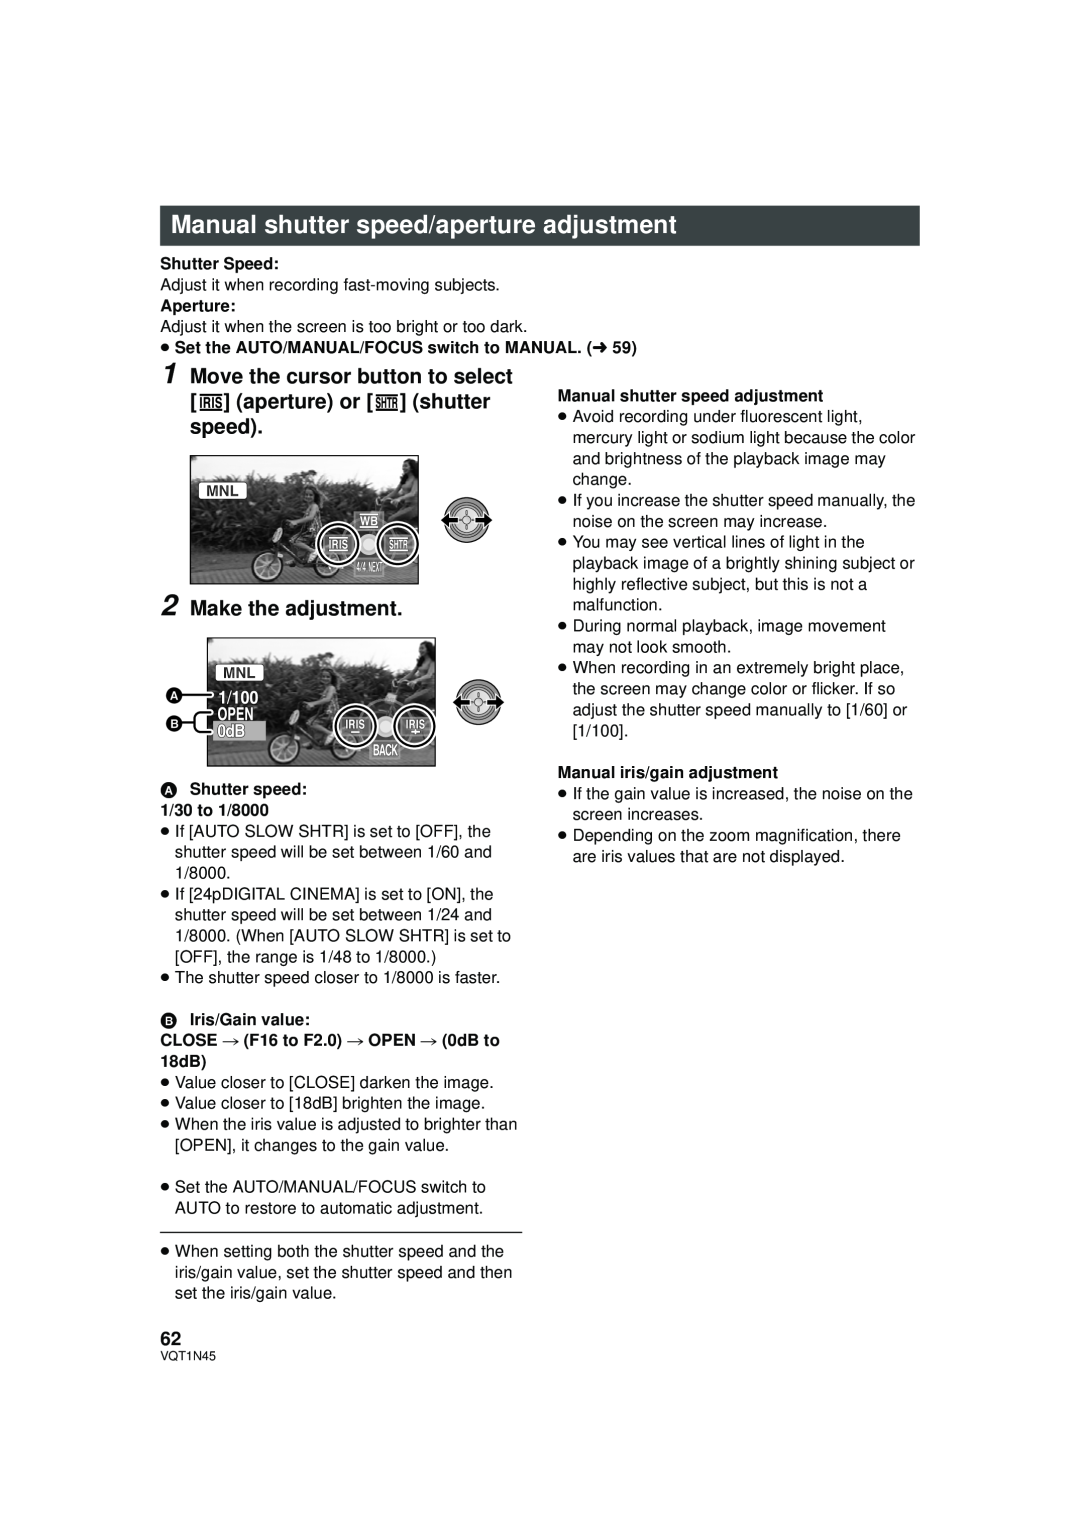 Panasonic HDC-SD9PC manual Manual shutter speed/aperture adjustment, Make the adjustment, Shutter Speed, Aperture 